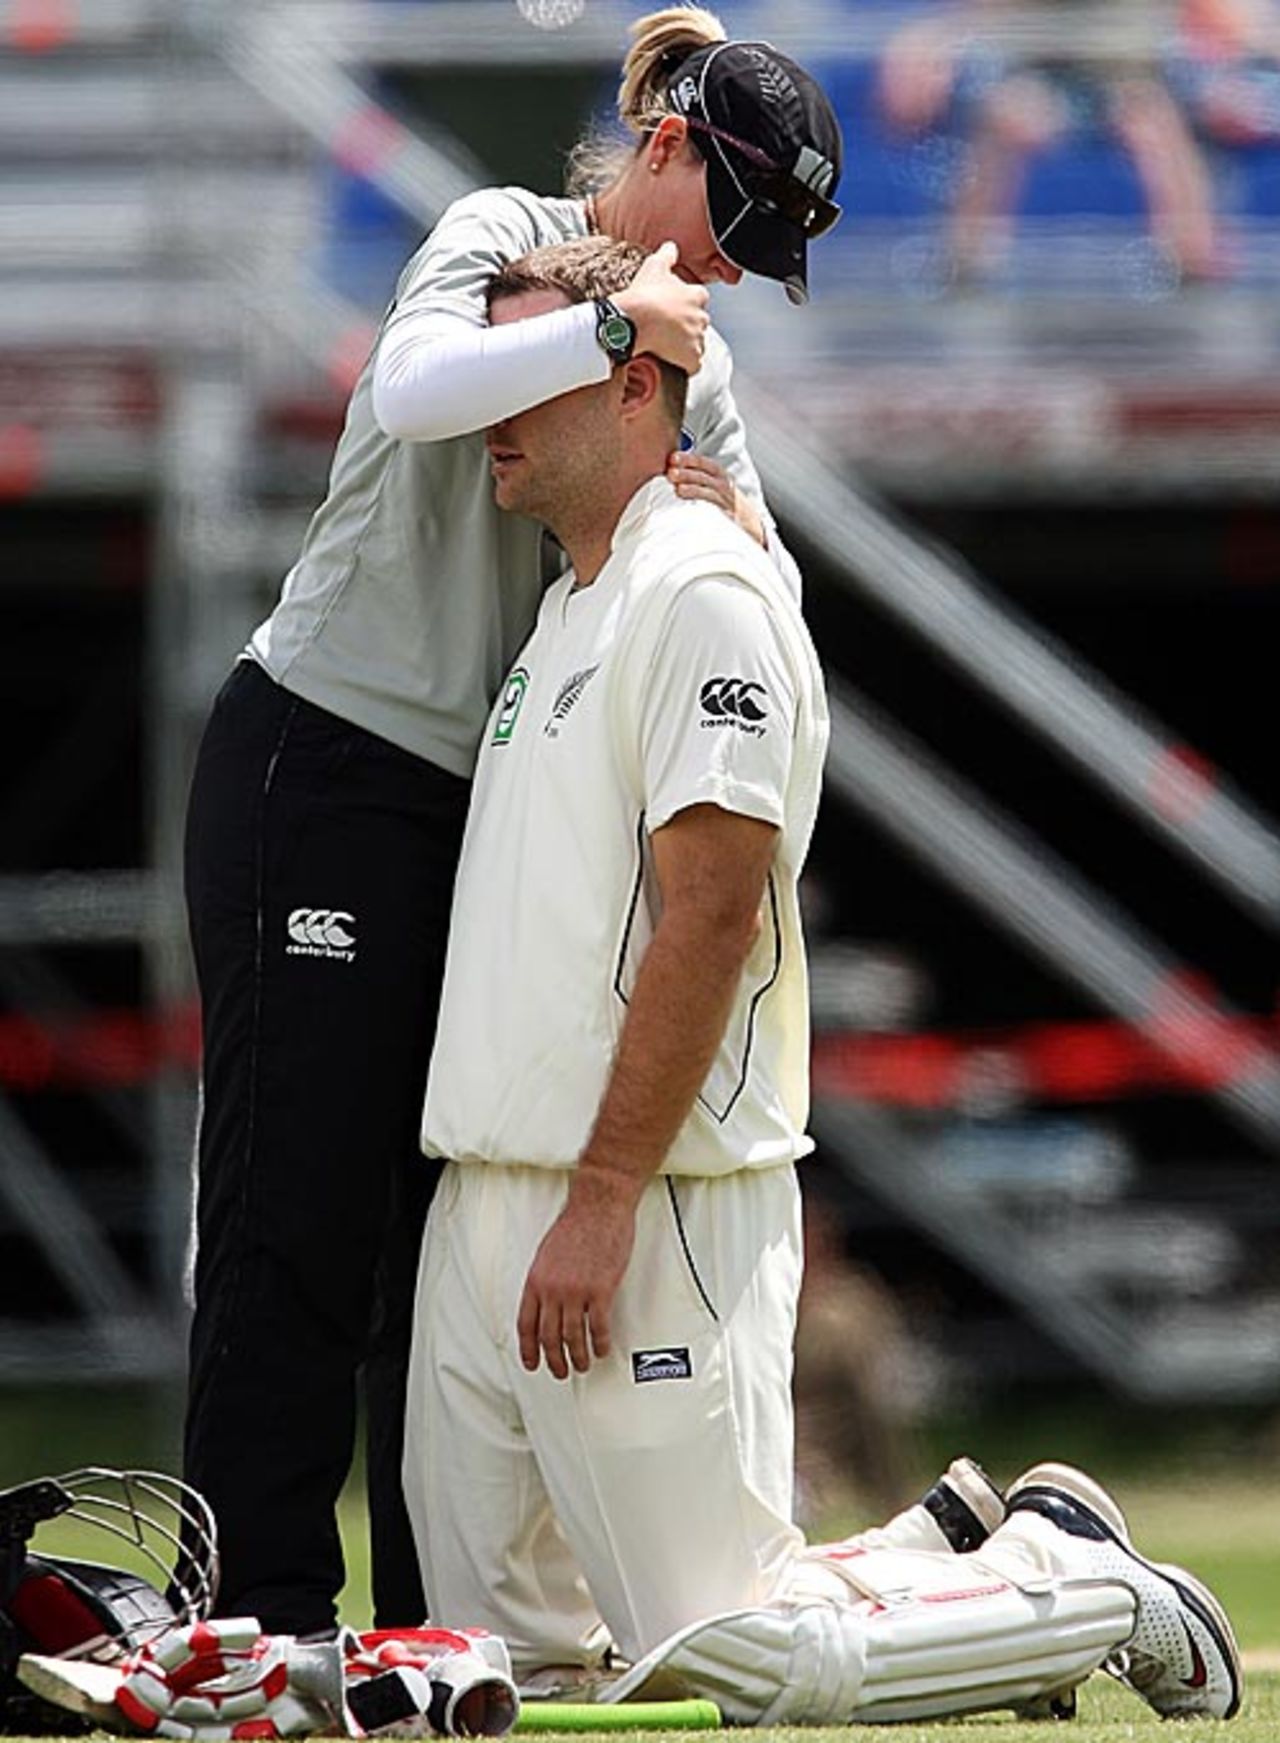 Daniel Vettori gets some treatment on his neck, New Zealand v Pakistan, 1st Test, Dunedin, 2nd day, November 25, 2009